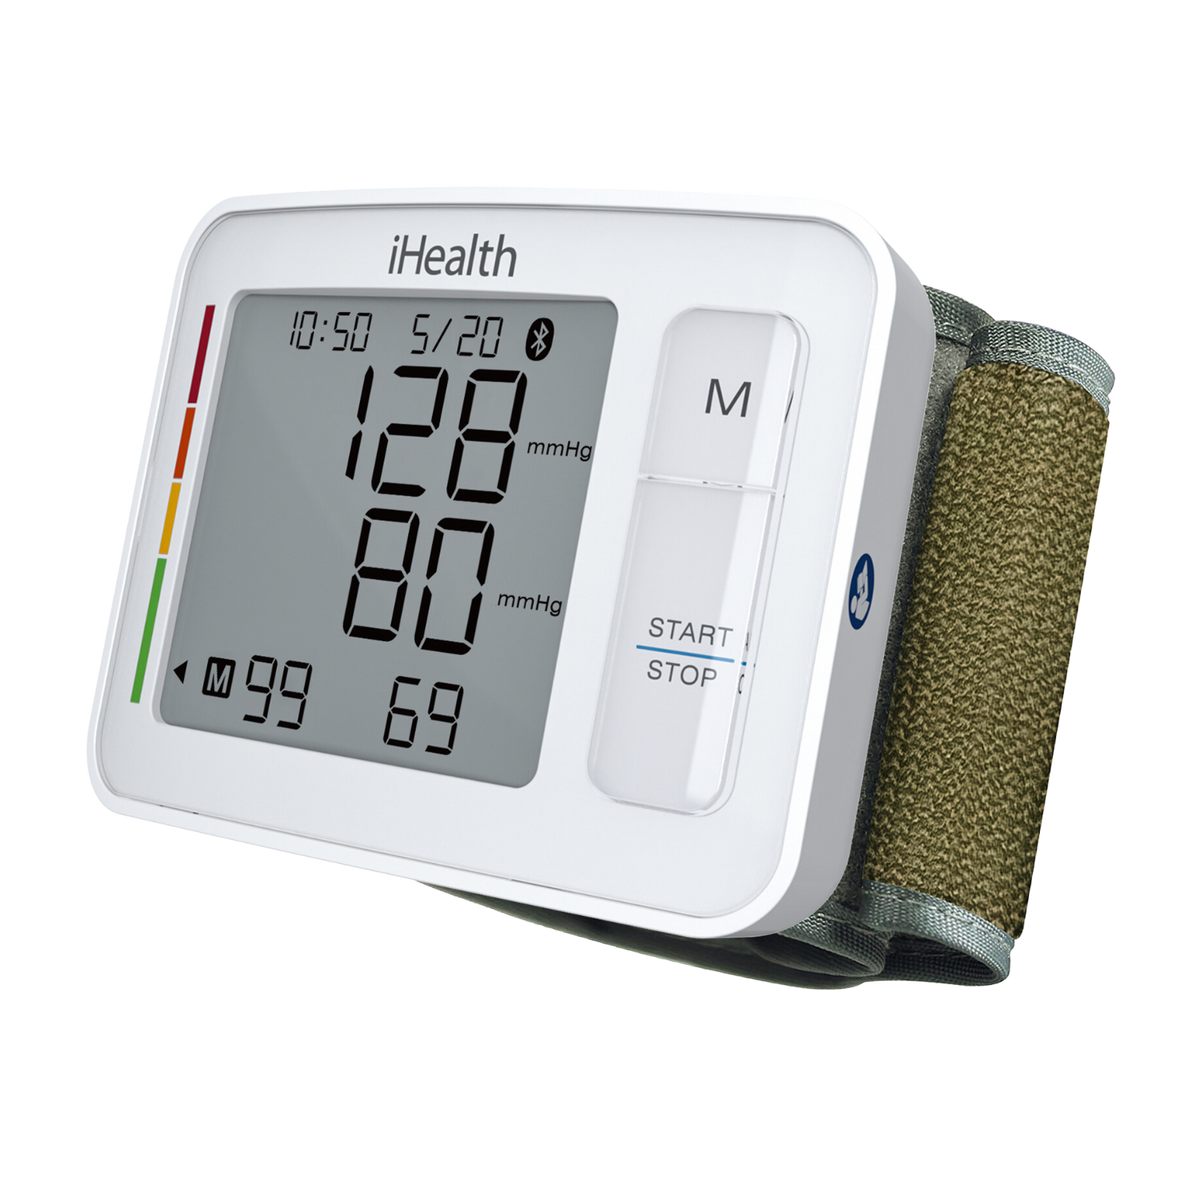 iHealth Push Wrist Blood Pressure Monitor